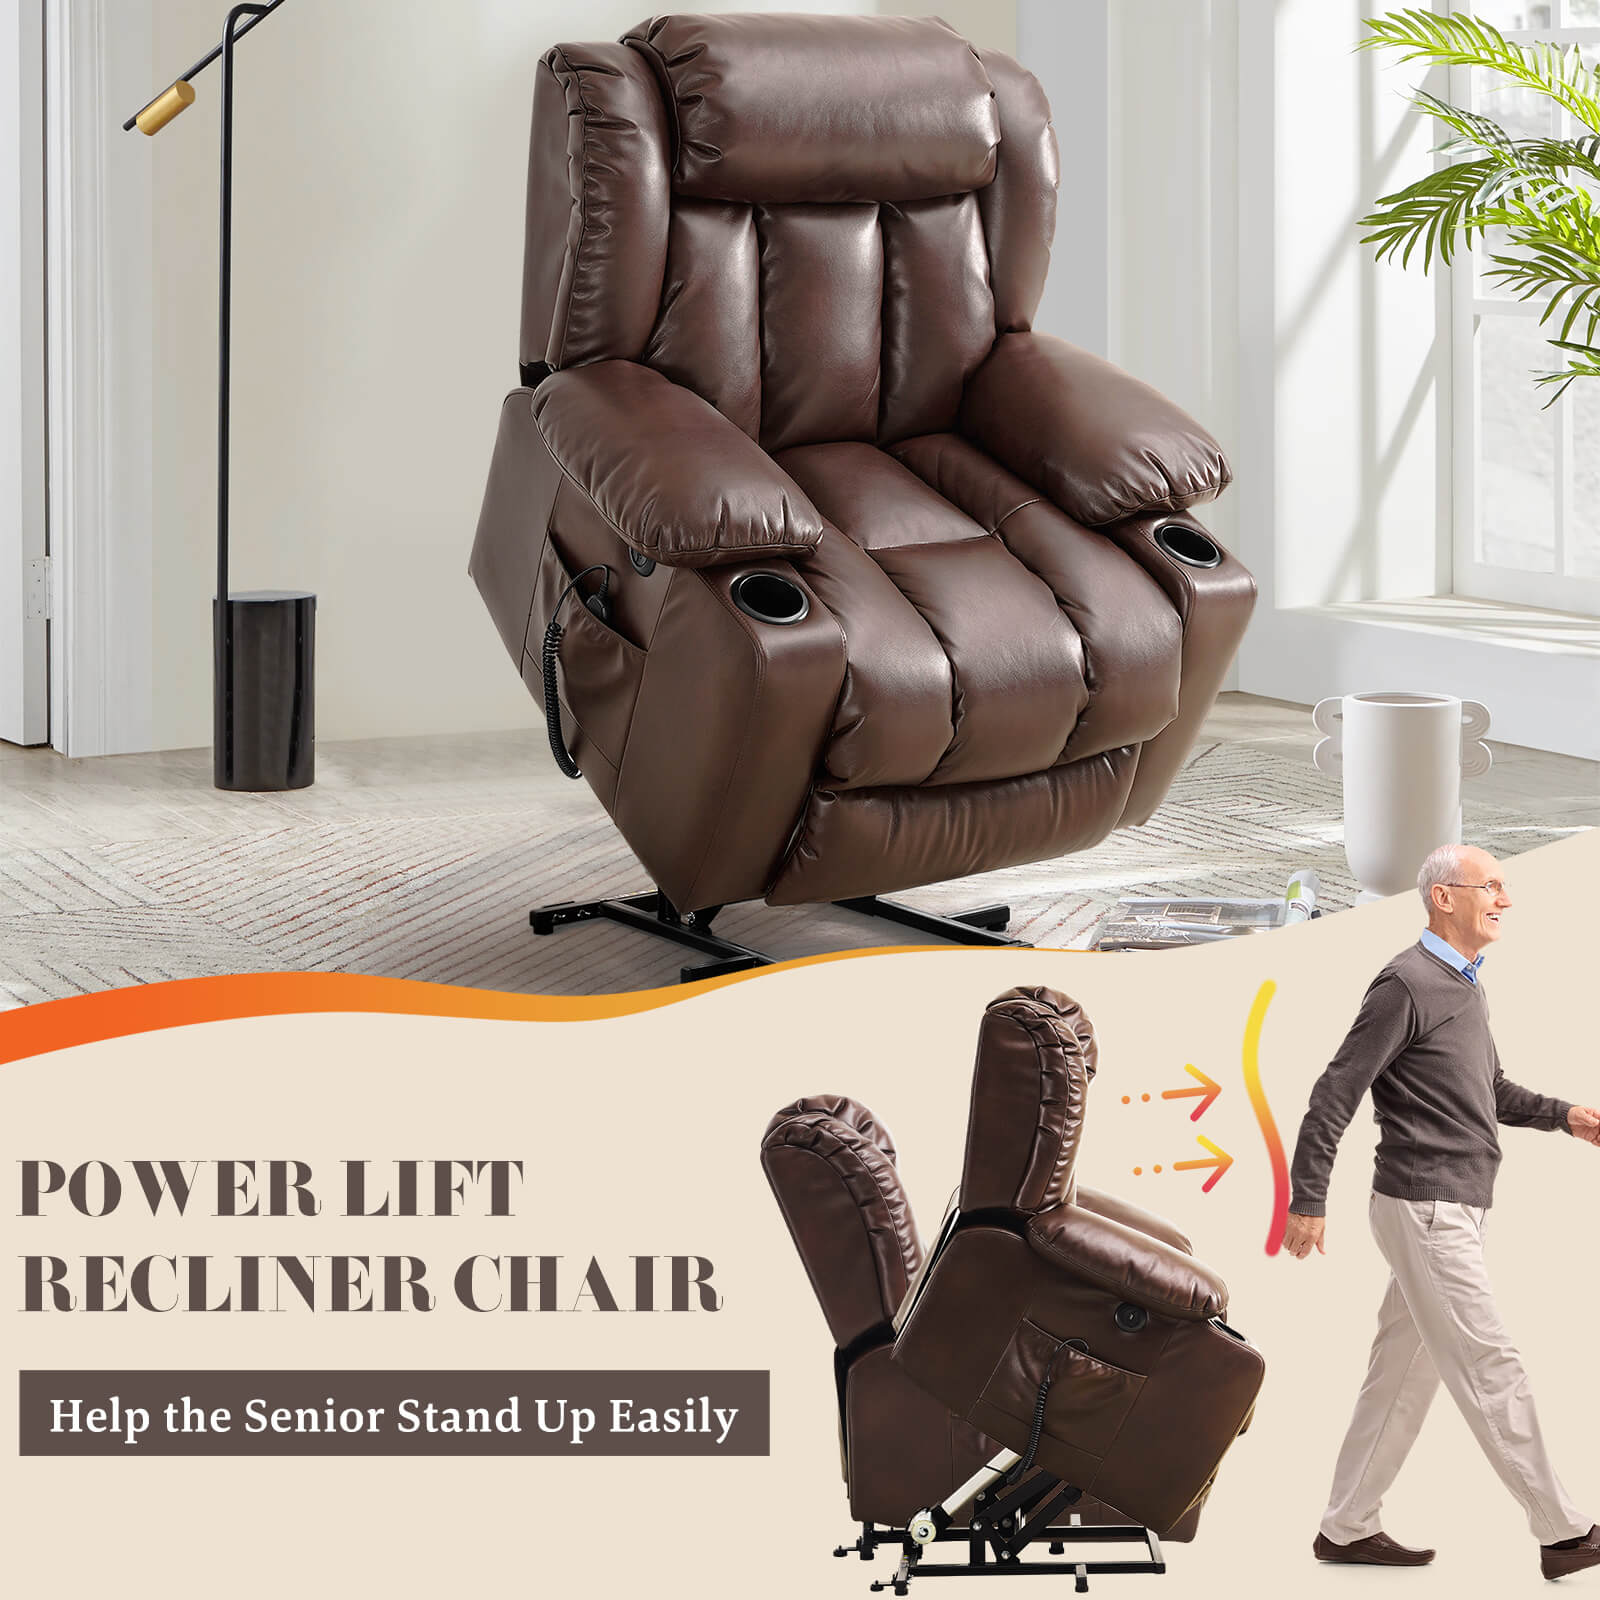 Portable Lift Chair for Elderly